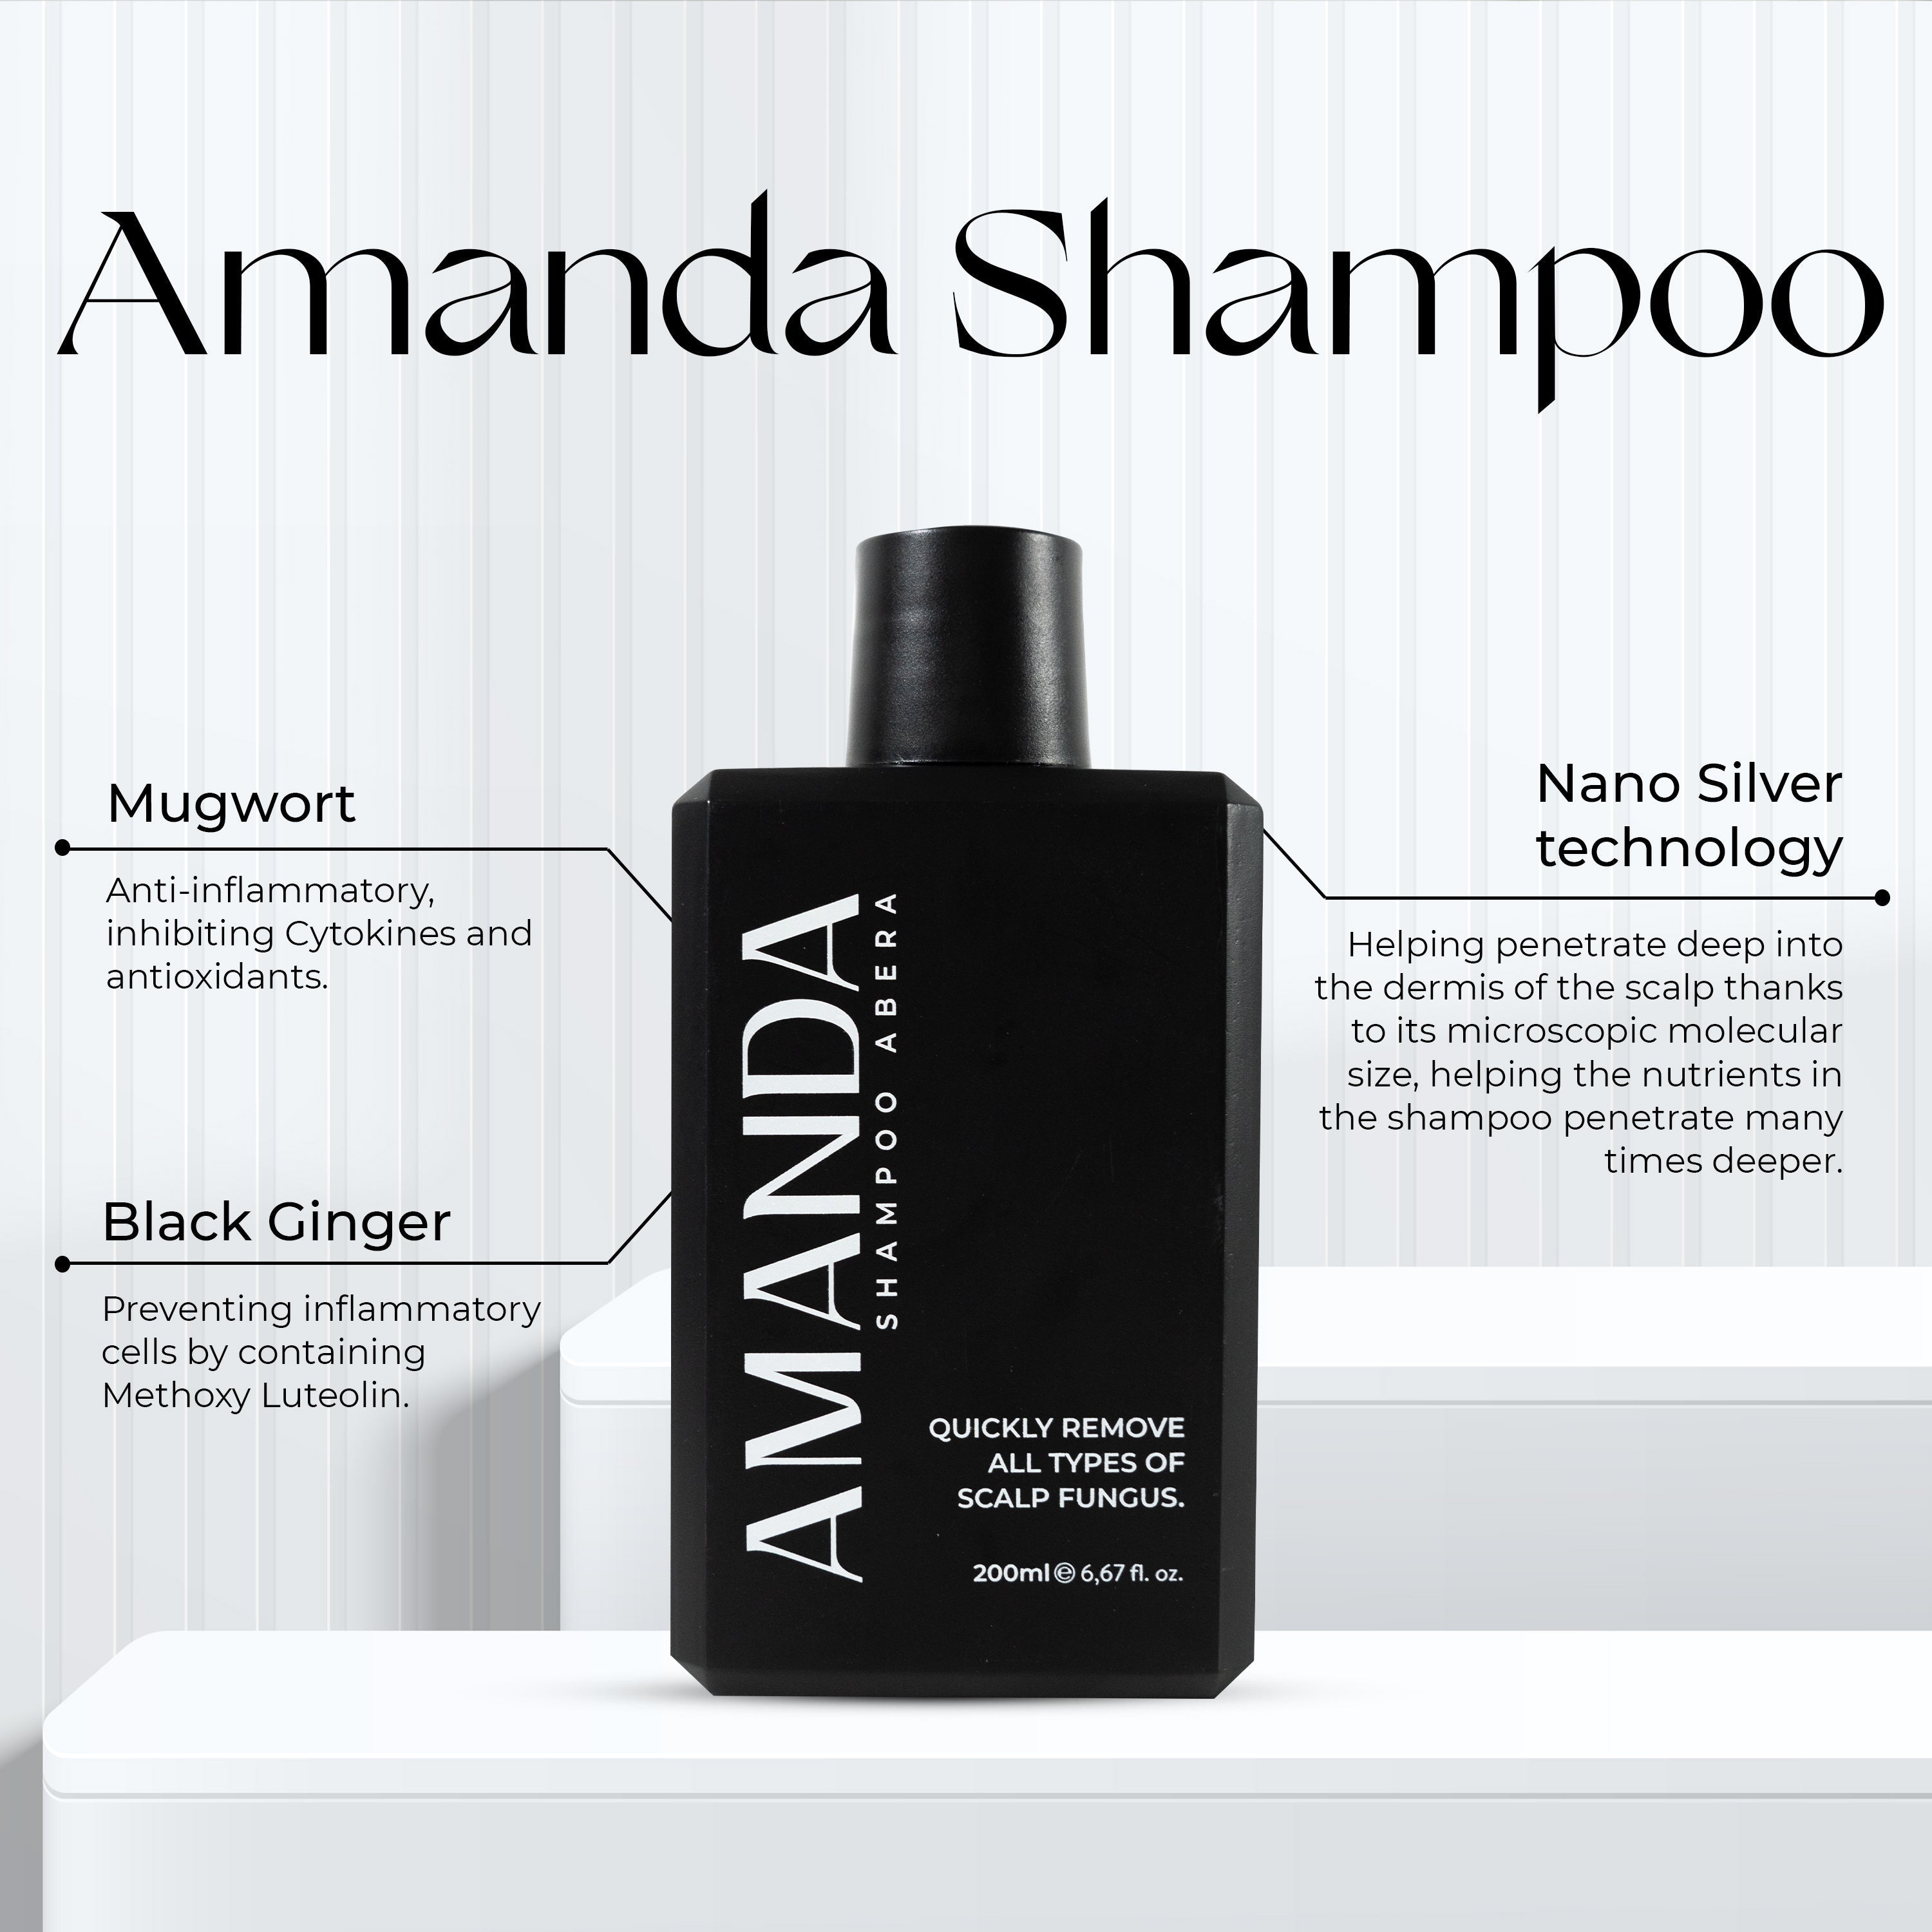 SUPER SALE 50% Amanda Abera Shampoo &amp; Vera Abera Hair Serum - CS